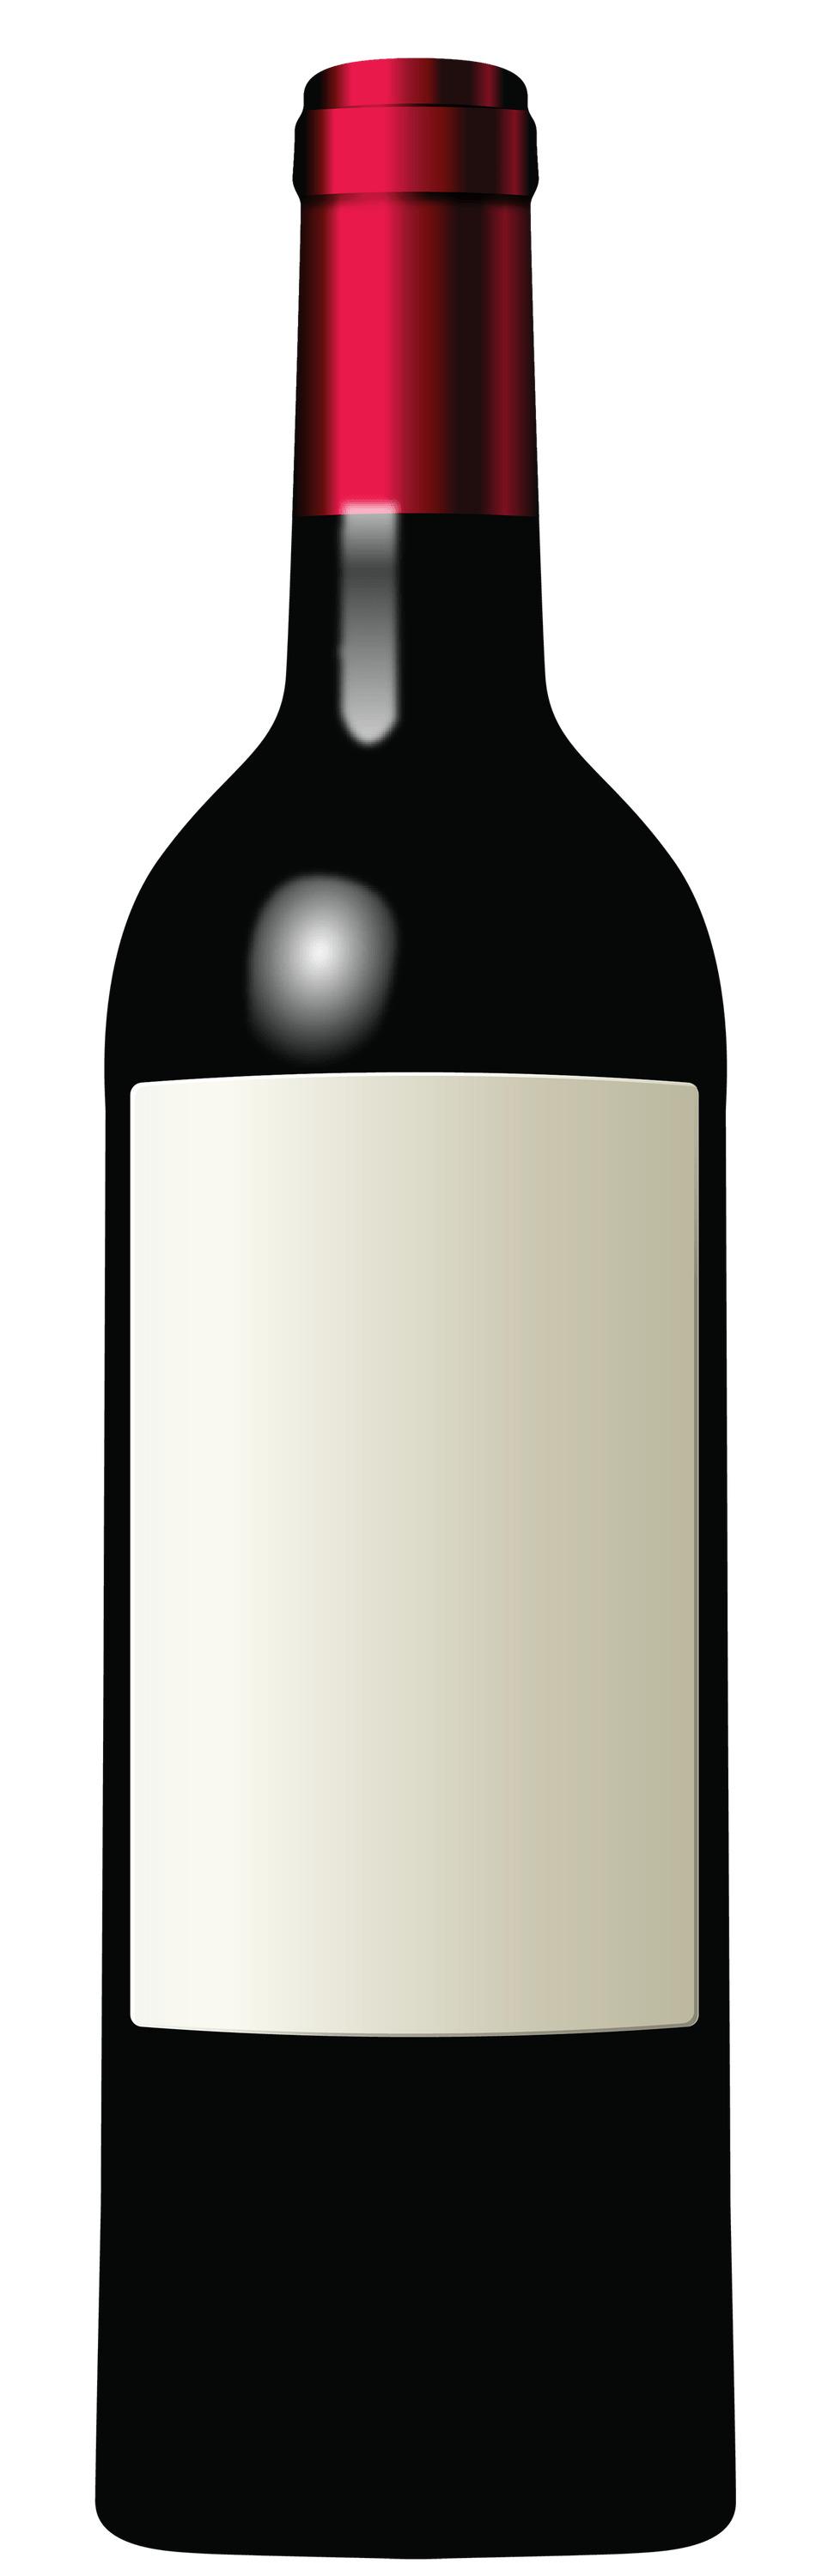 Bottle Wine Red Whitelabel png transparent